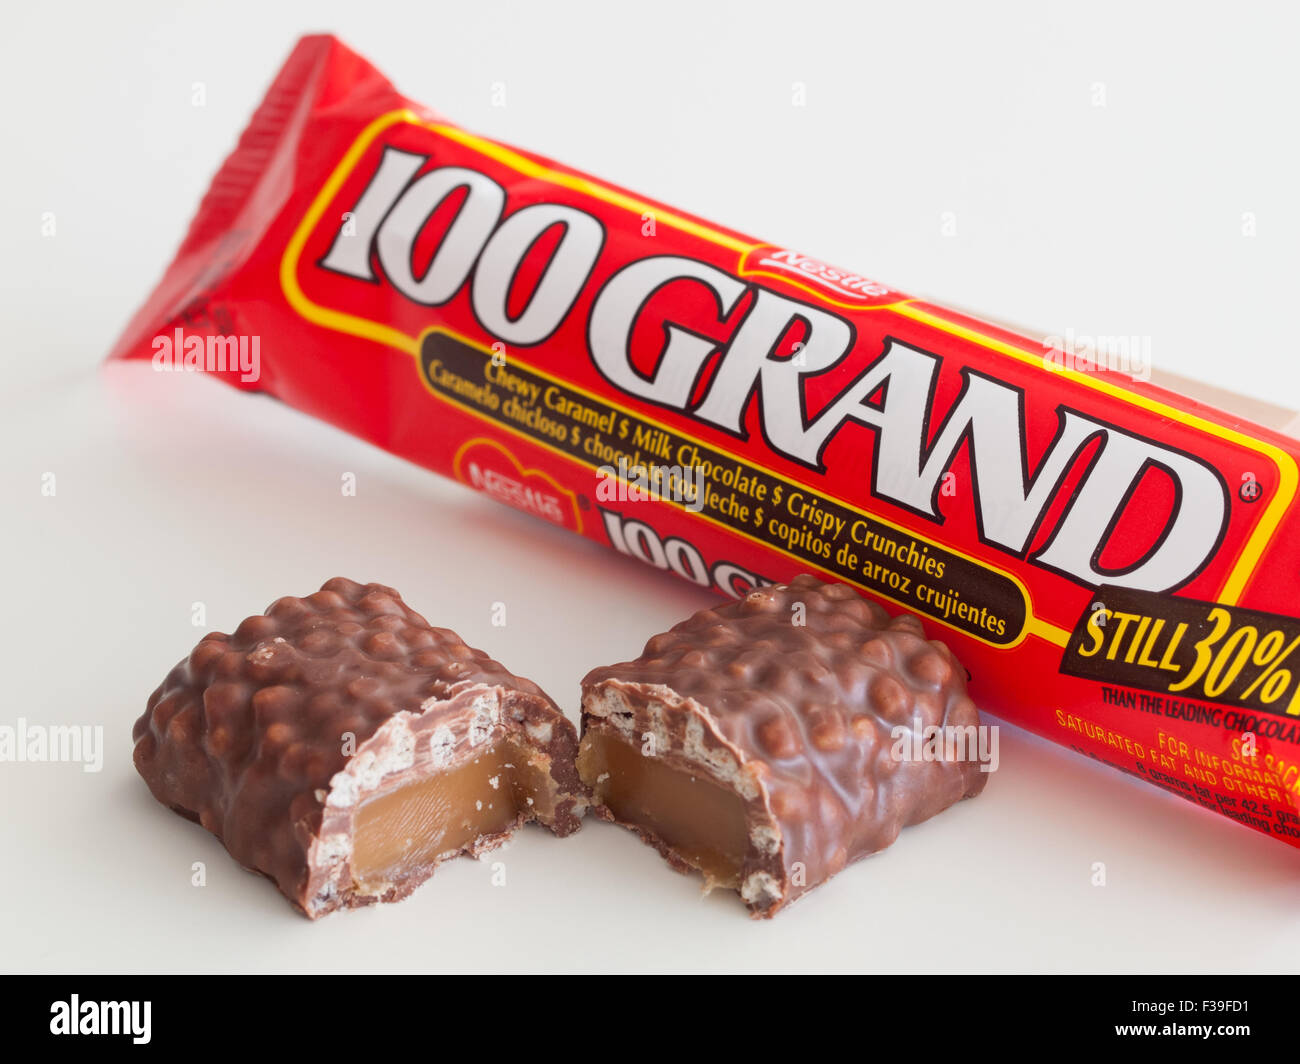 A 100 Grand Bar, a chocolate candy bar made by Nestlé. Stock Photo